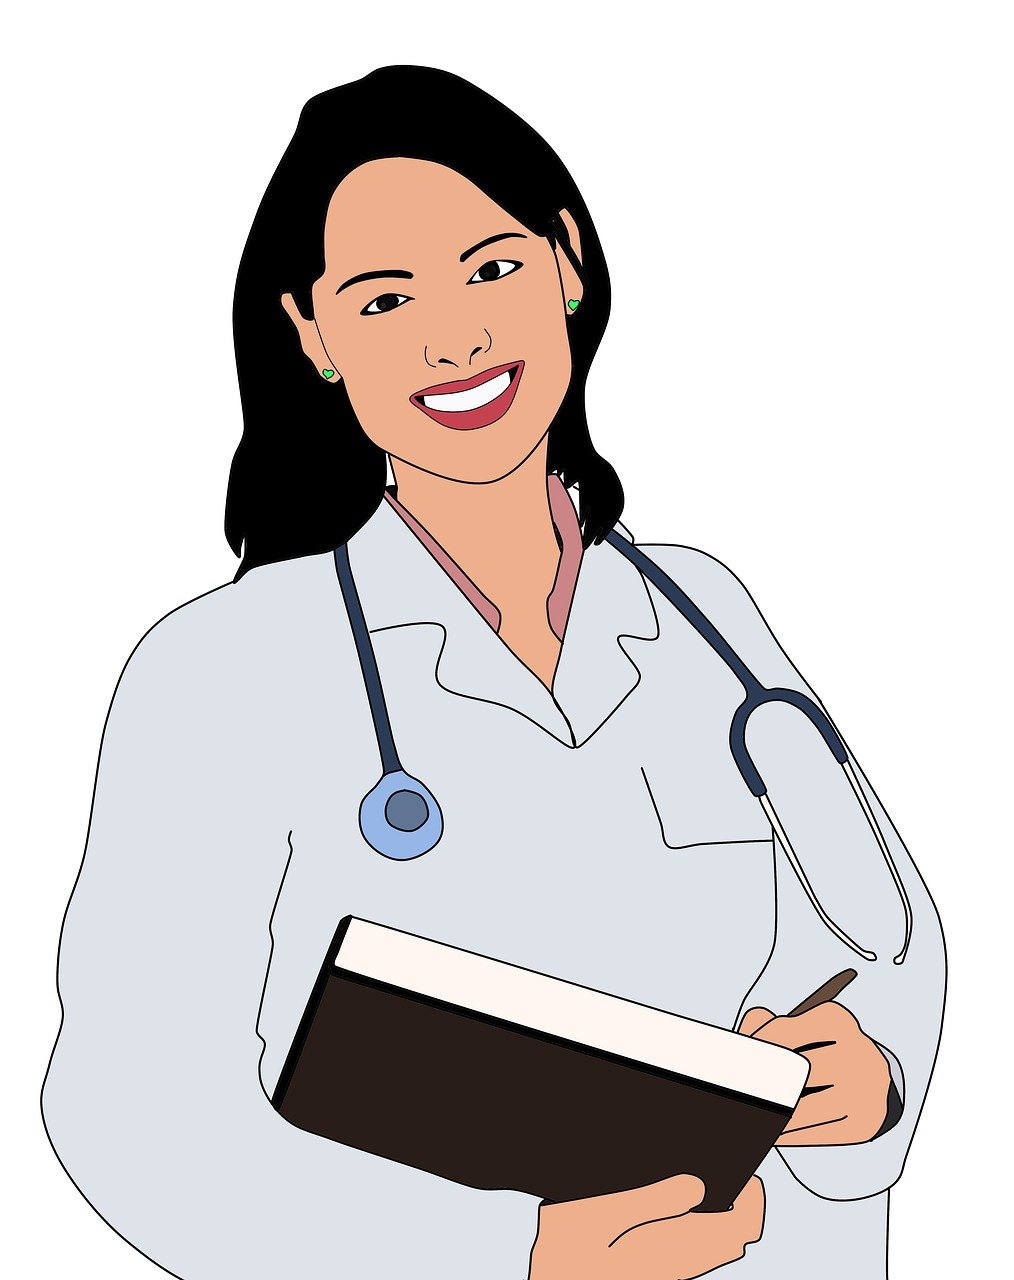 Medical Malpractice Insurance For Nurses